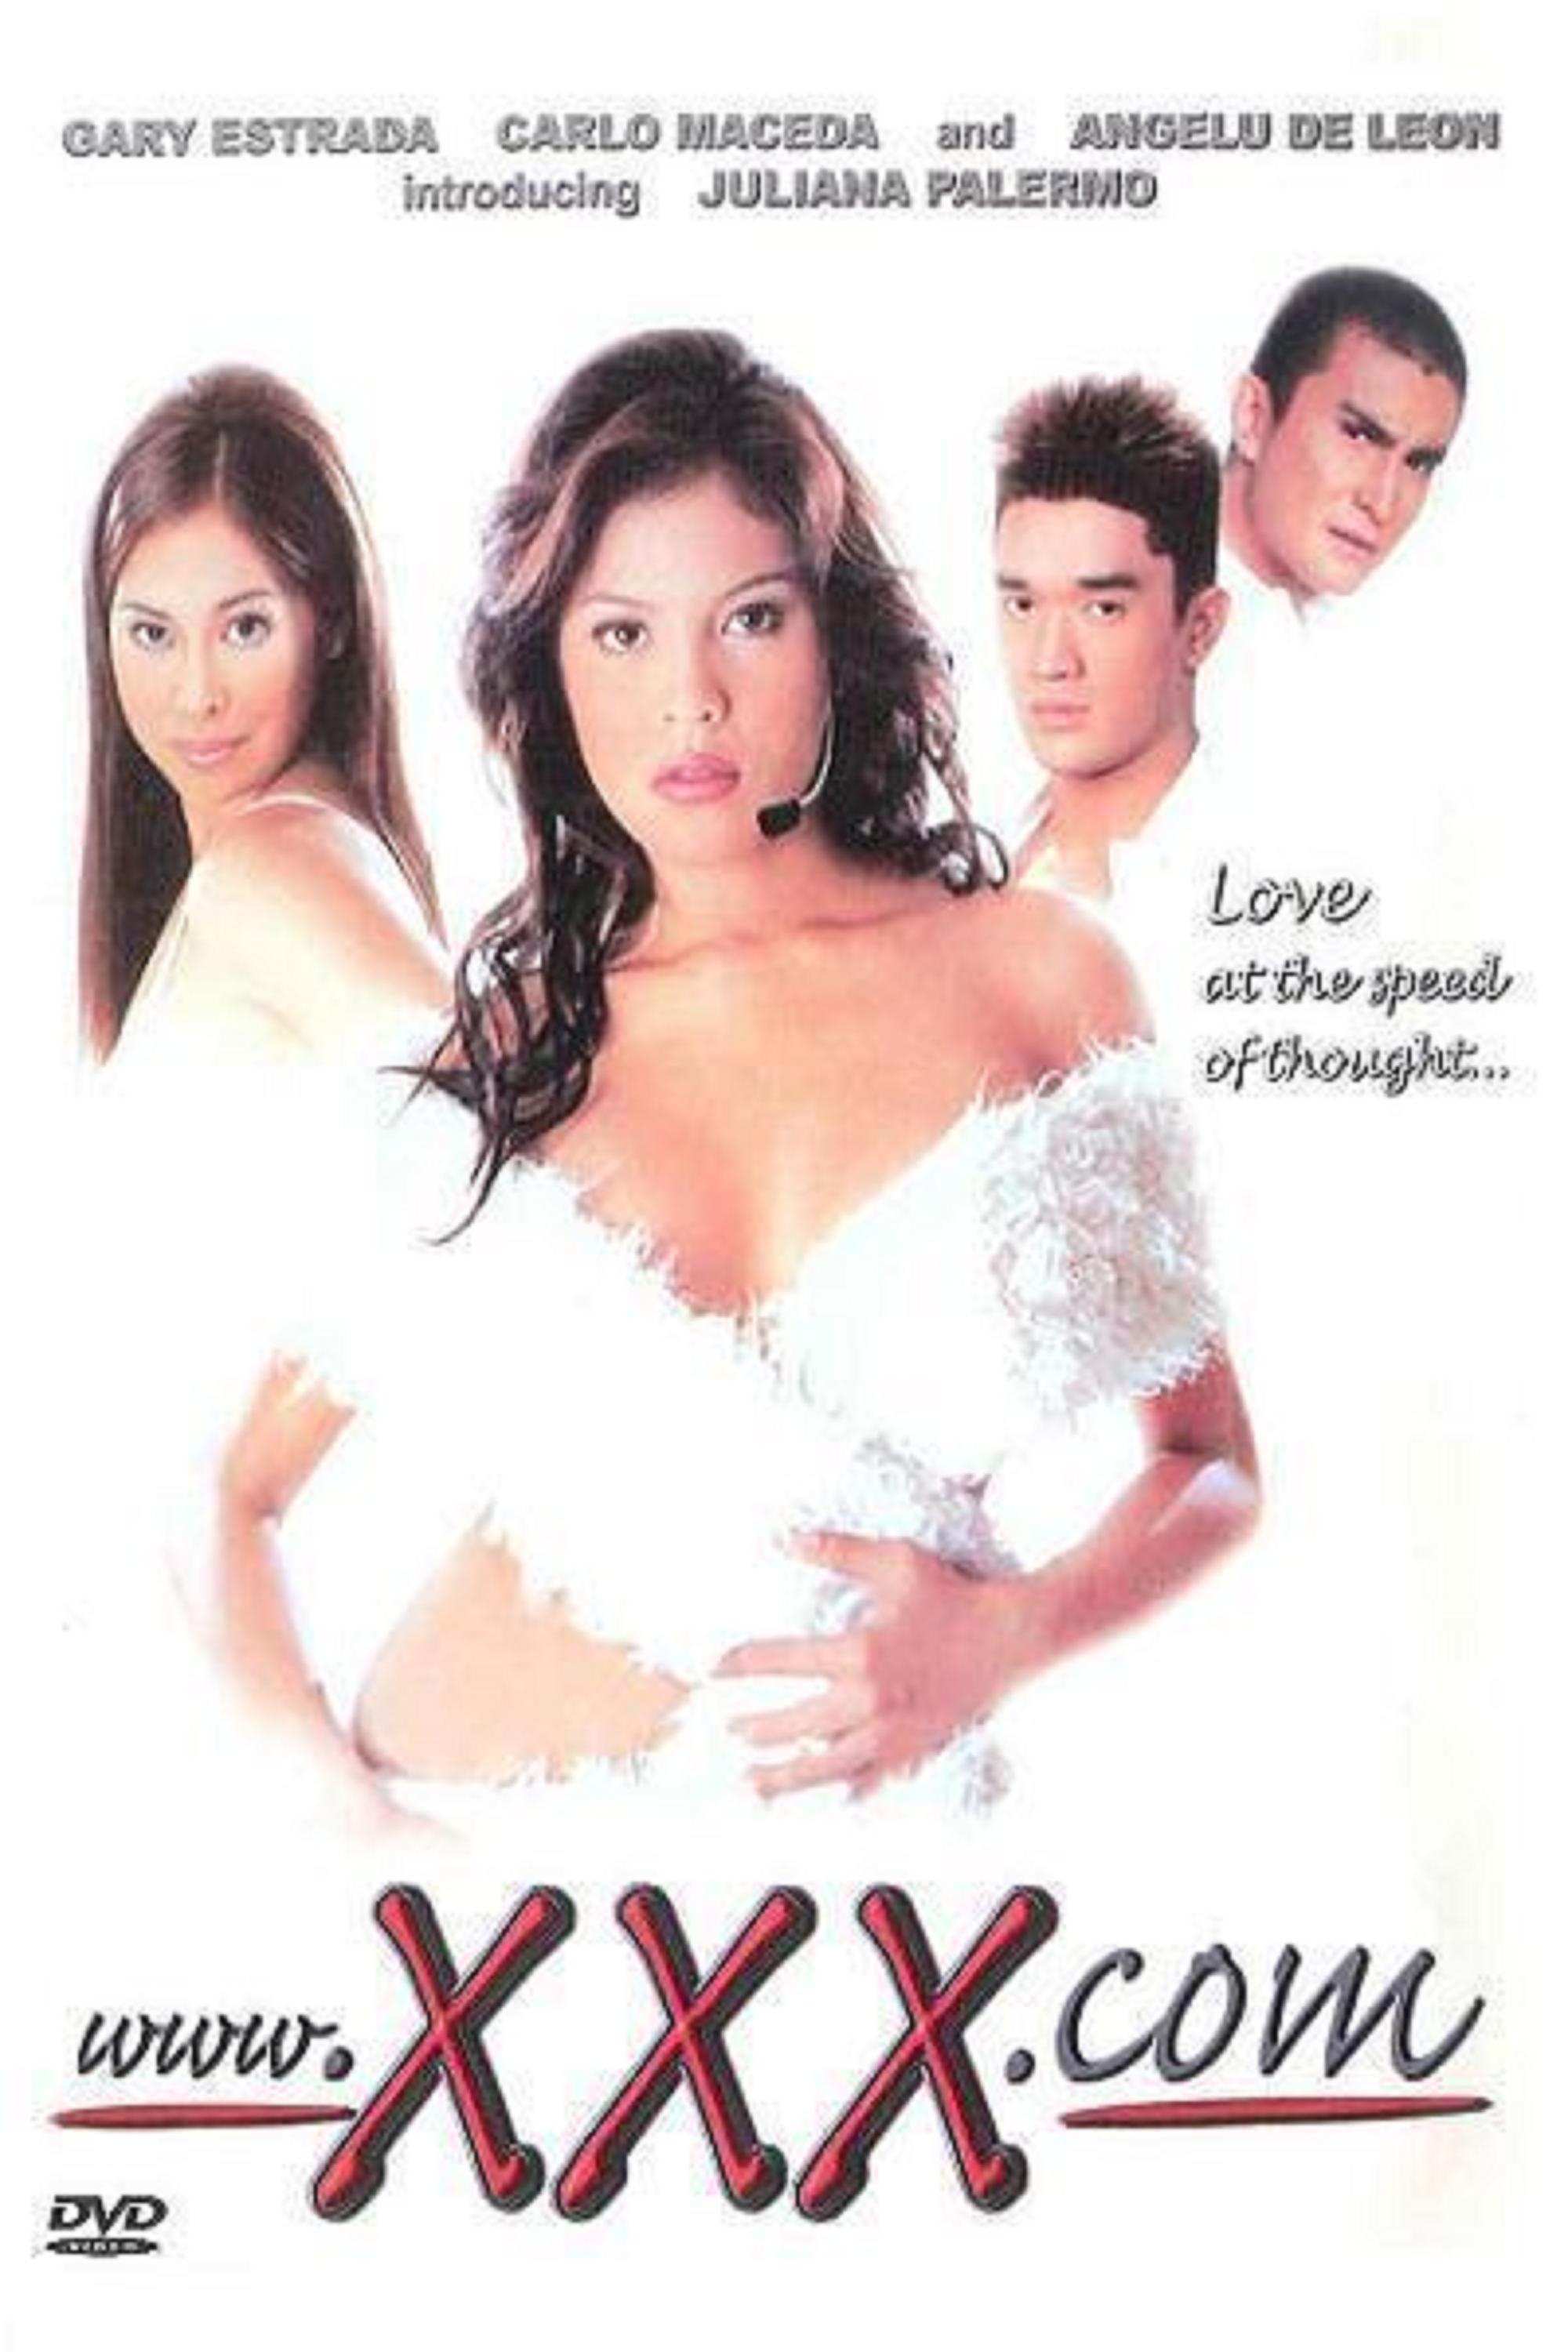 www.XXX.com (2003) with English Subtitles on DVD - DVD Lady - Classics on  DVD